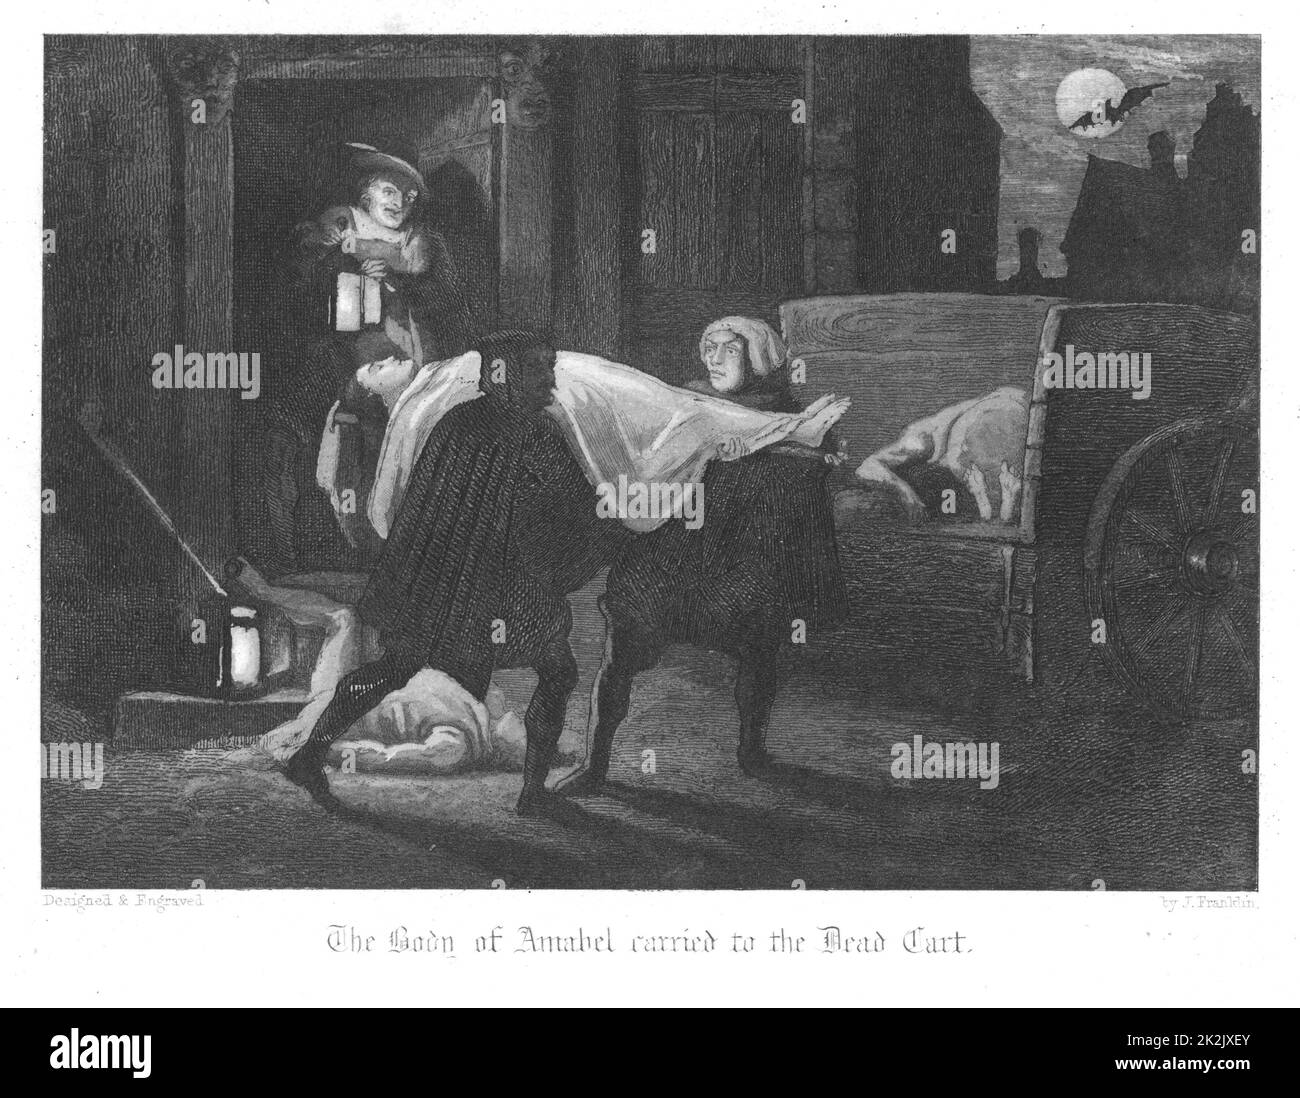 Plague pit london Cut Out Stock Images & Pictures - Alamy